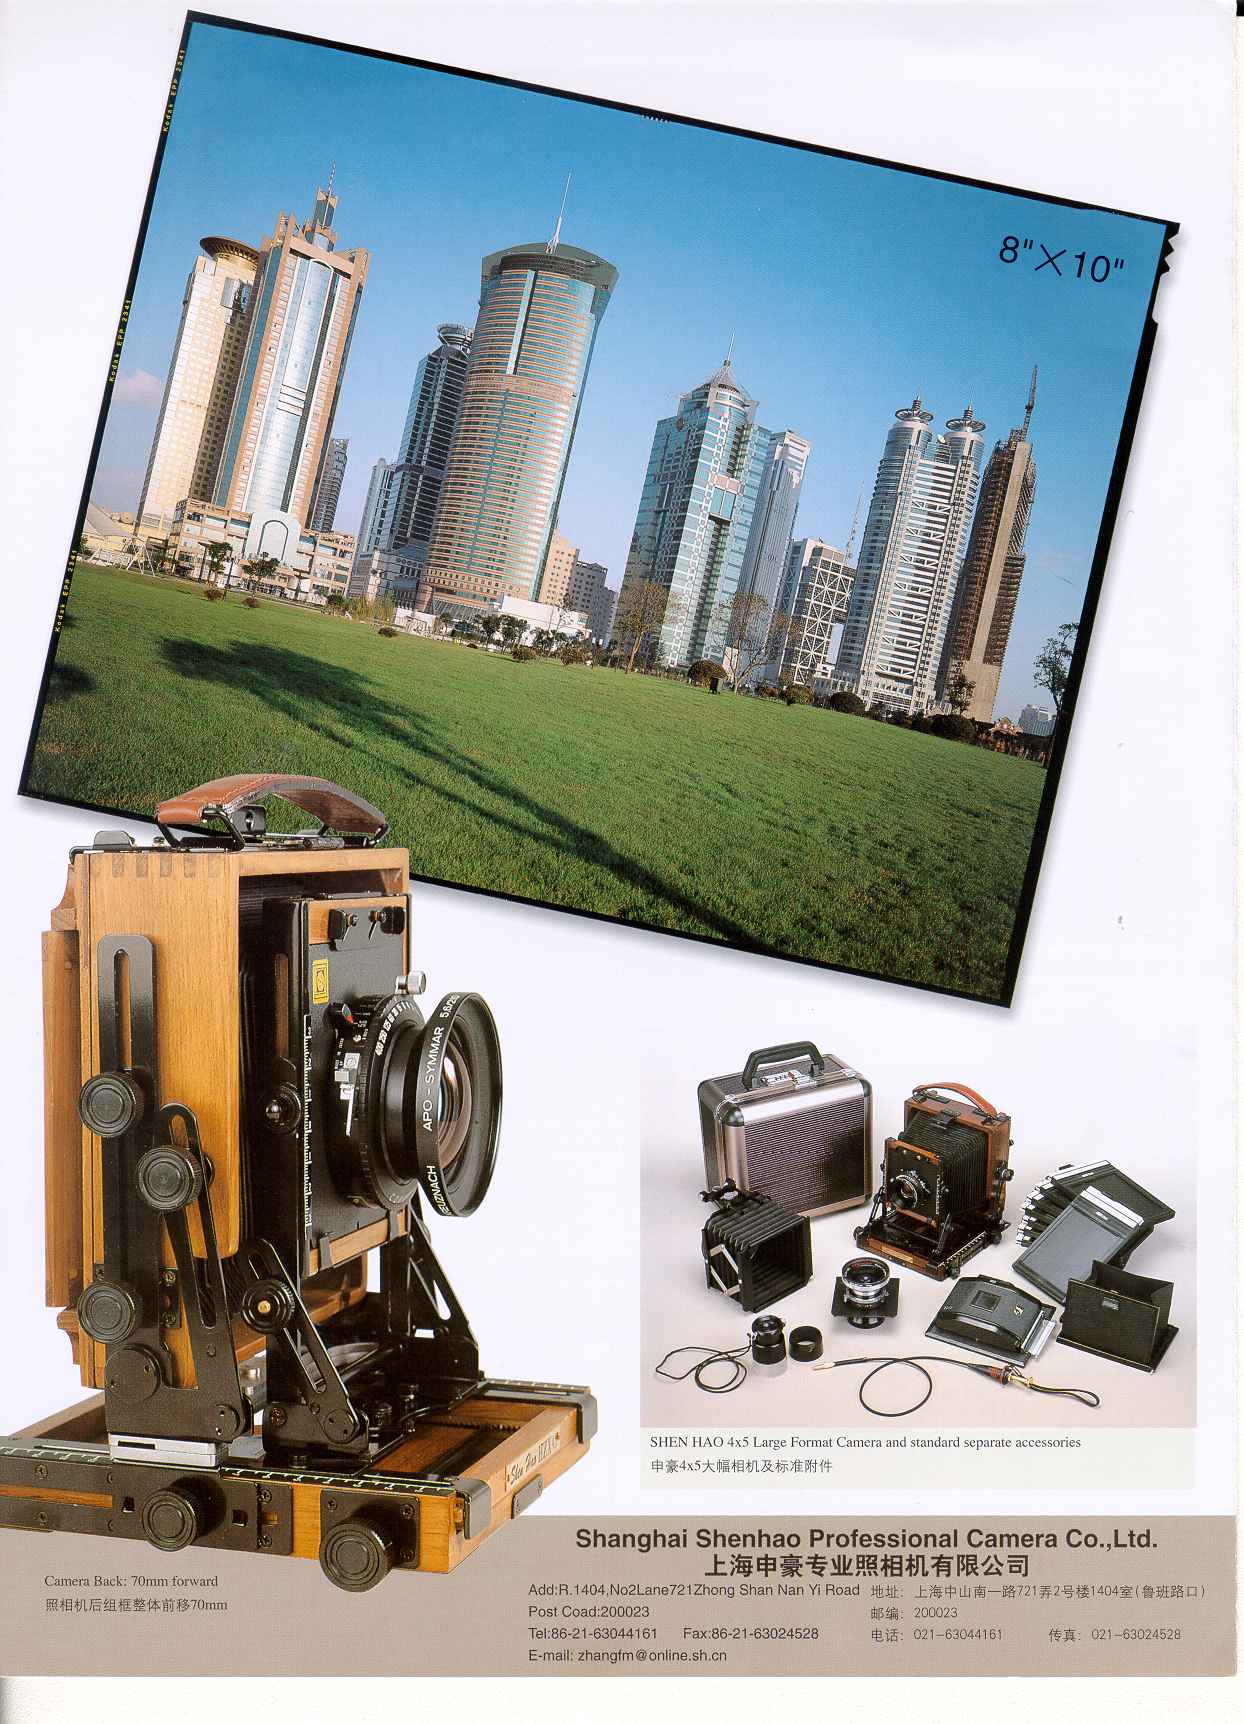 Large format cameras: The Shanghai Shenhao